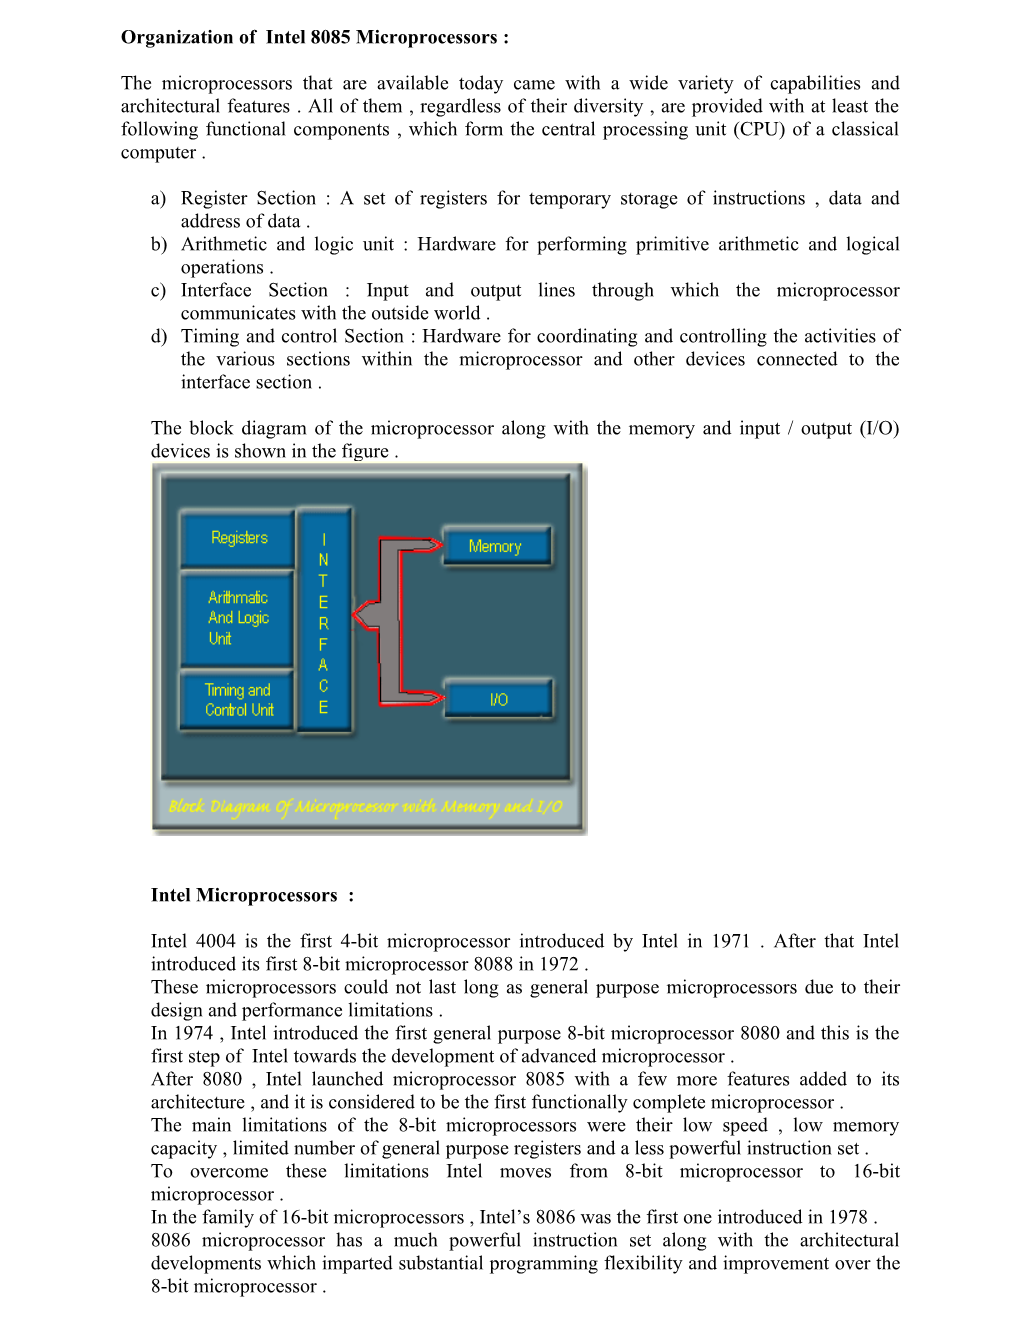 Organization of Intel 8085 Microprocessors s1